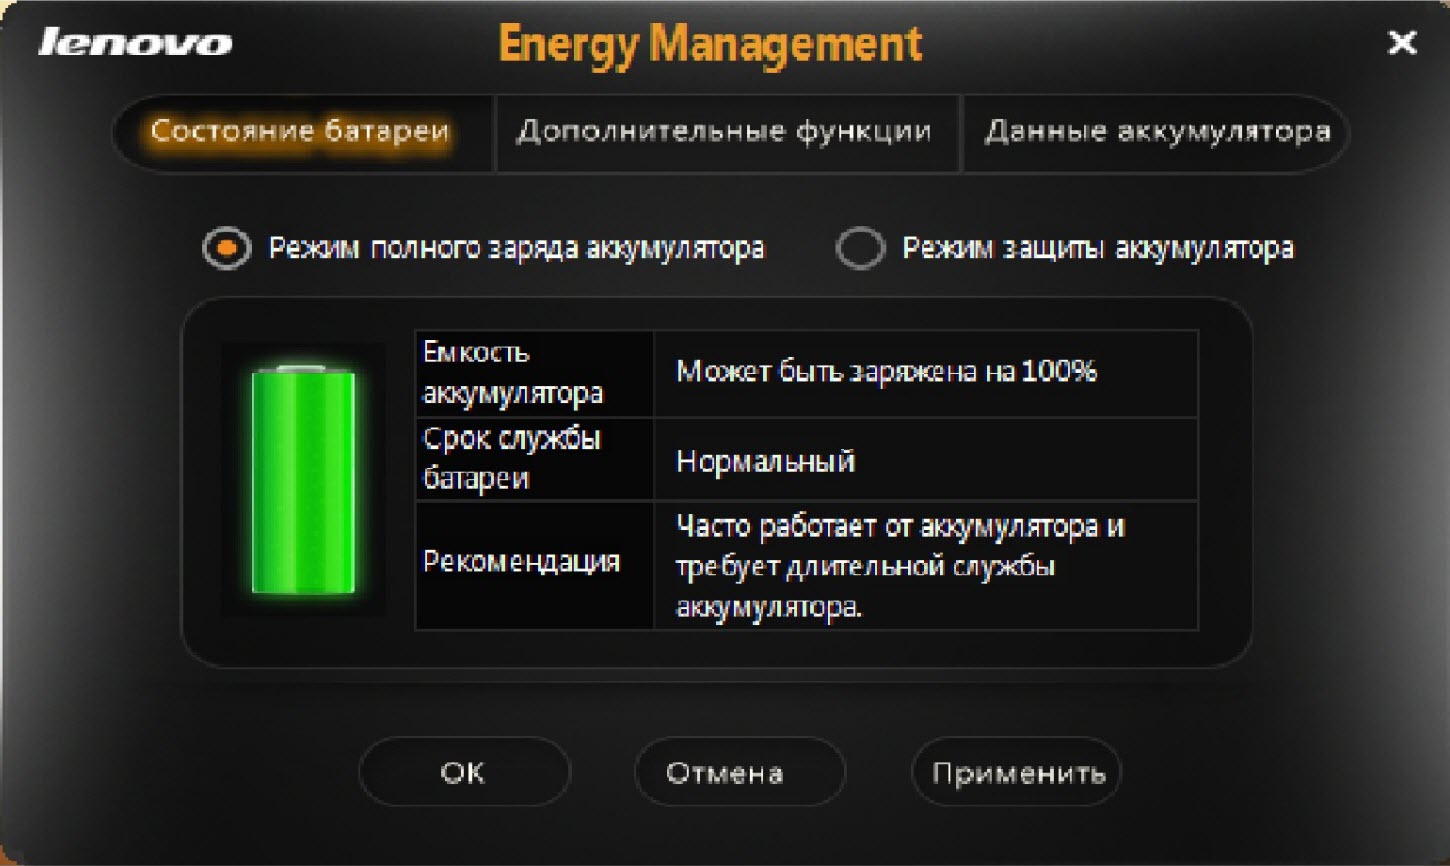 Lenovo energy manager. Lenovo Energy Management. Менеджер батареи Lenovo. Lenovo Energy Management 8.0.2.14. Программы для леново.